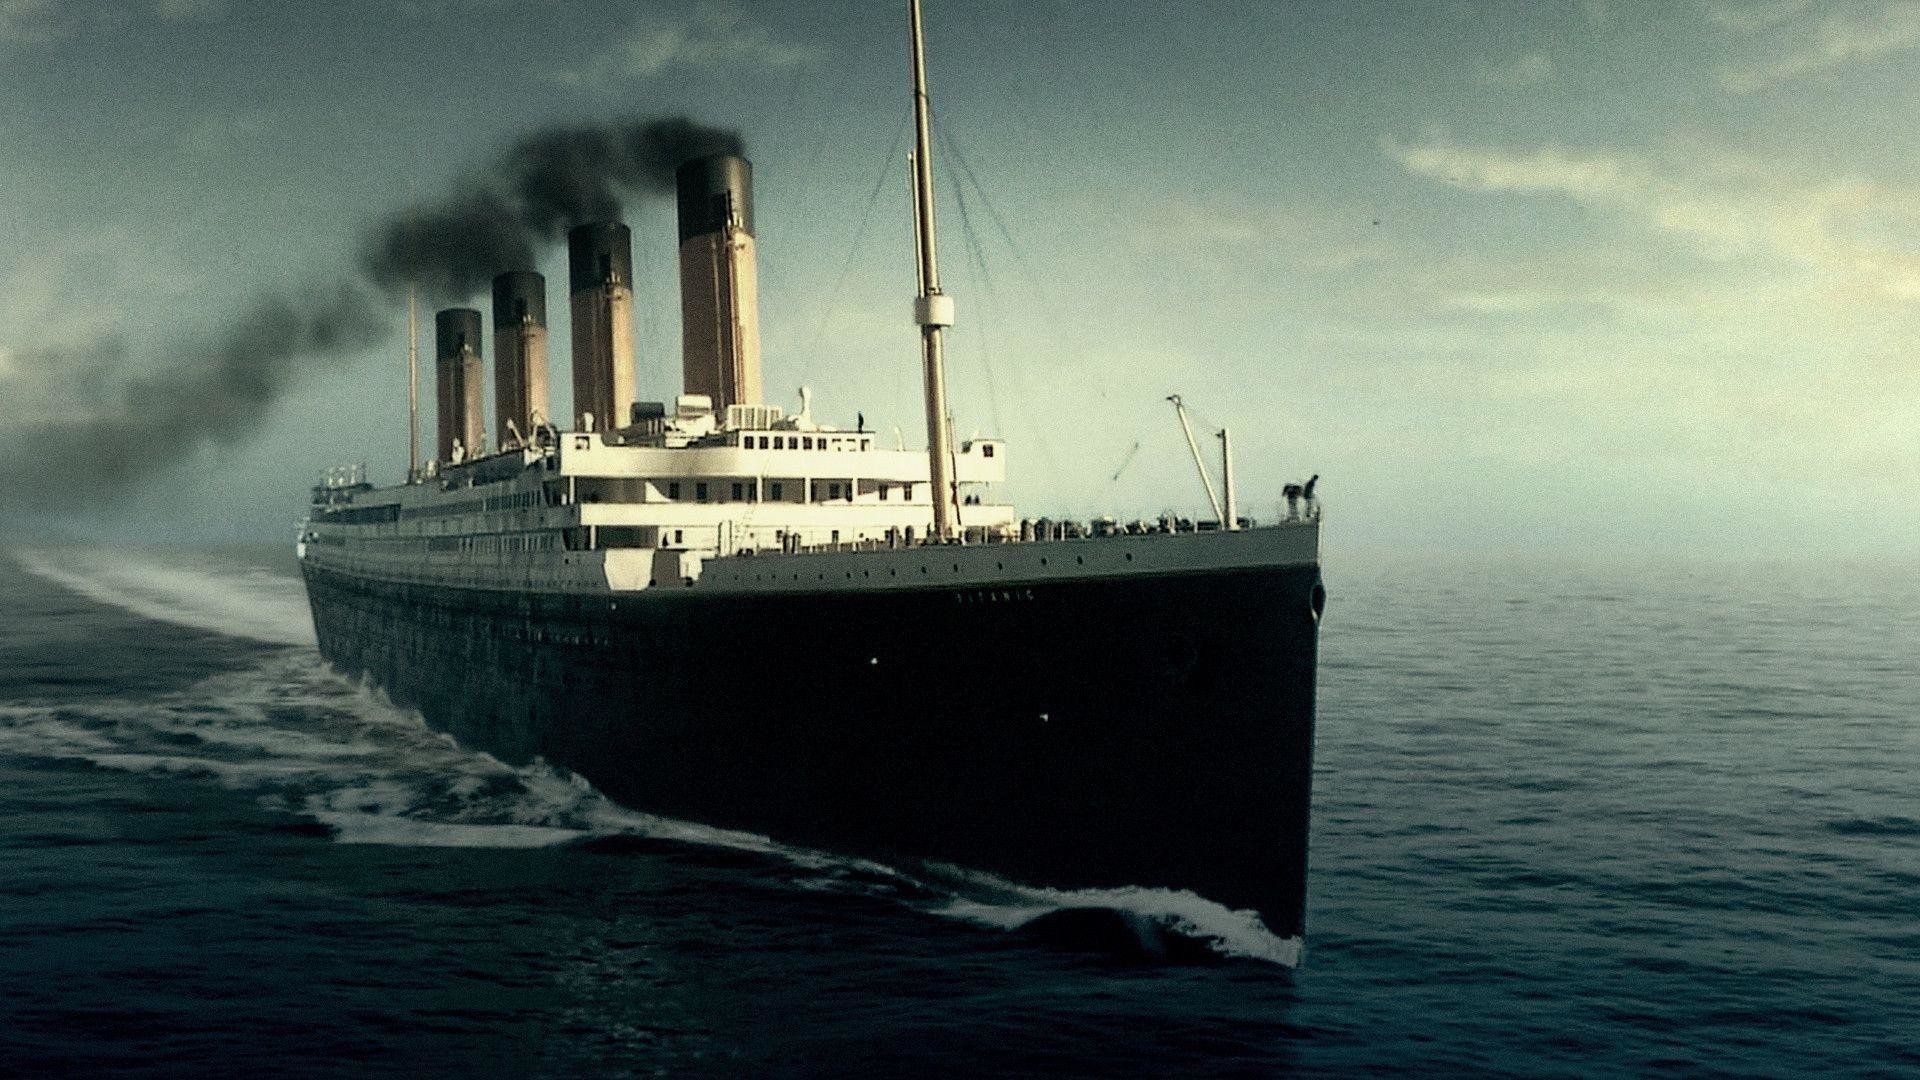 1920x1080 Fonds d'Ã©cran Titanic : tous les wallpapers Titanic